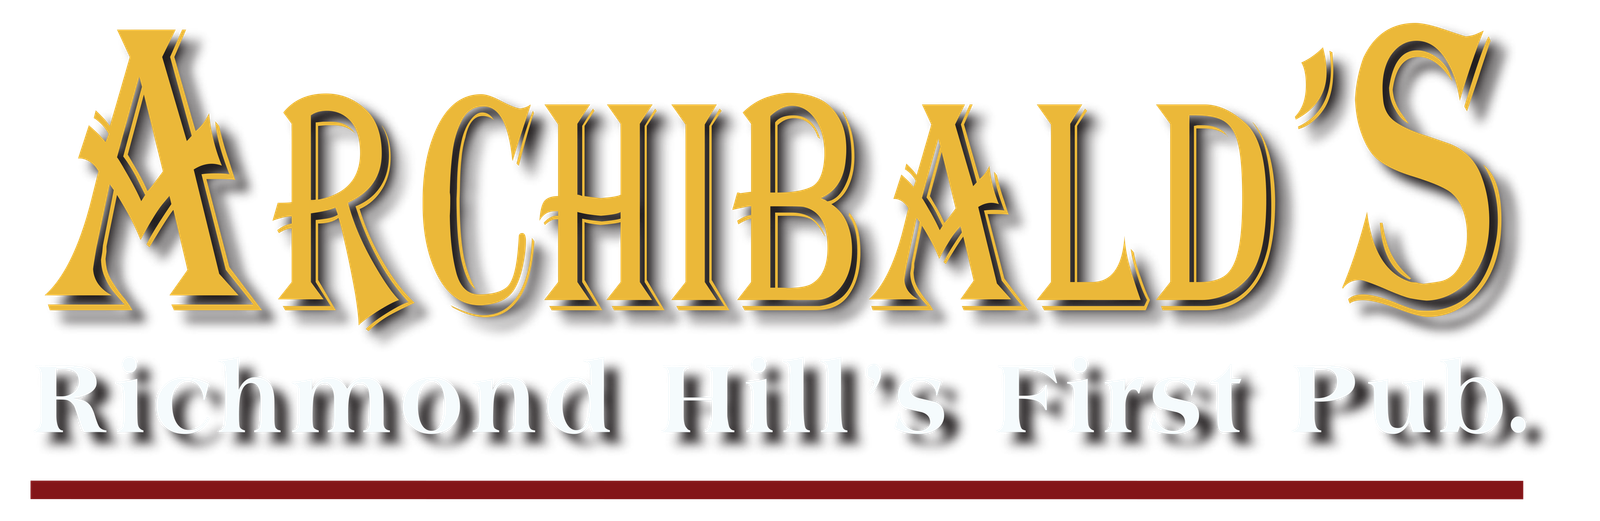 Archibalds Pub Richmond Hill's First Pub